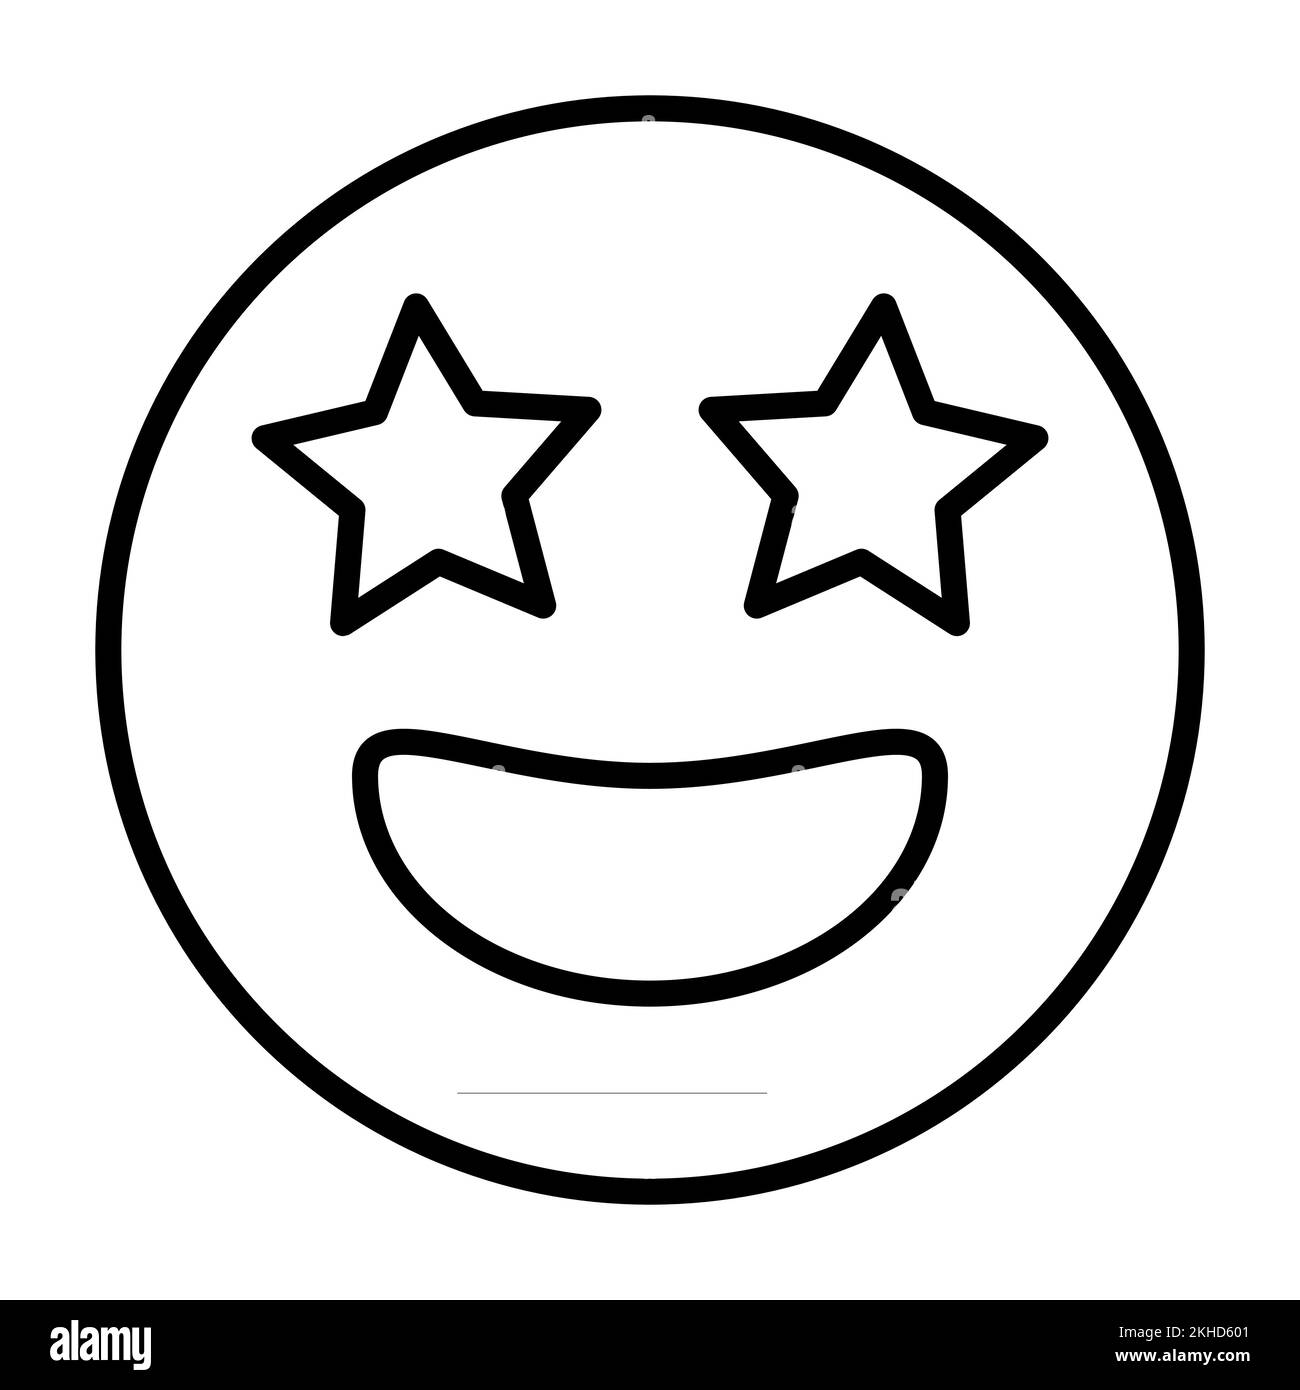 Superstar emoticon with starry eyes icon vector  star emoji sign for graphic design, logo, website, social media, mobile app, UI illustration Stock Vector